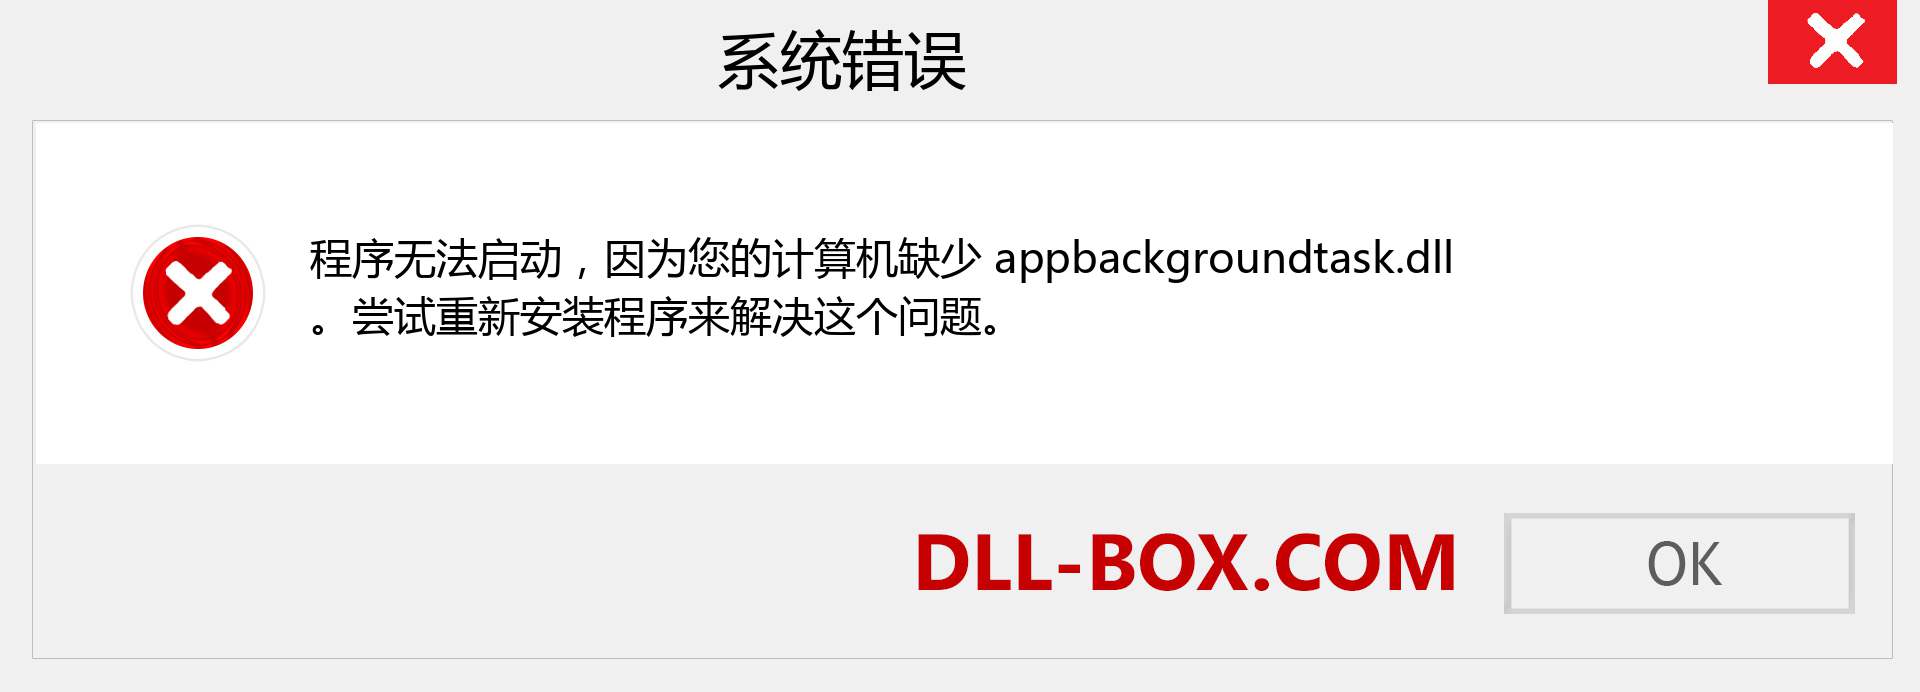 appbackgroundtask.dll 文件丢失？。 适用于 Windows 7、8、10 的下载 - 修复 Windows、照片、图像上的 appbackgroundtask dll 丢失错误